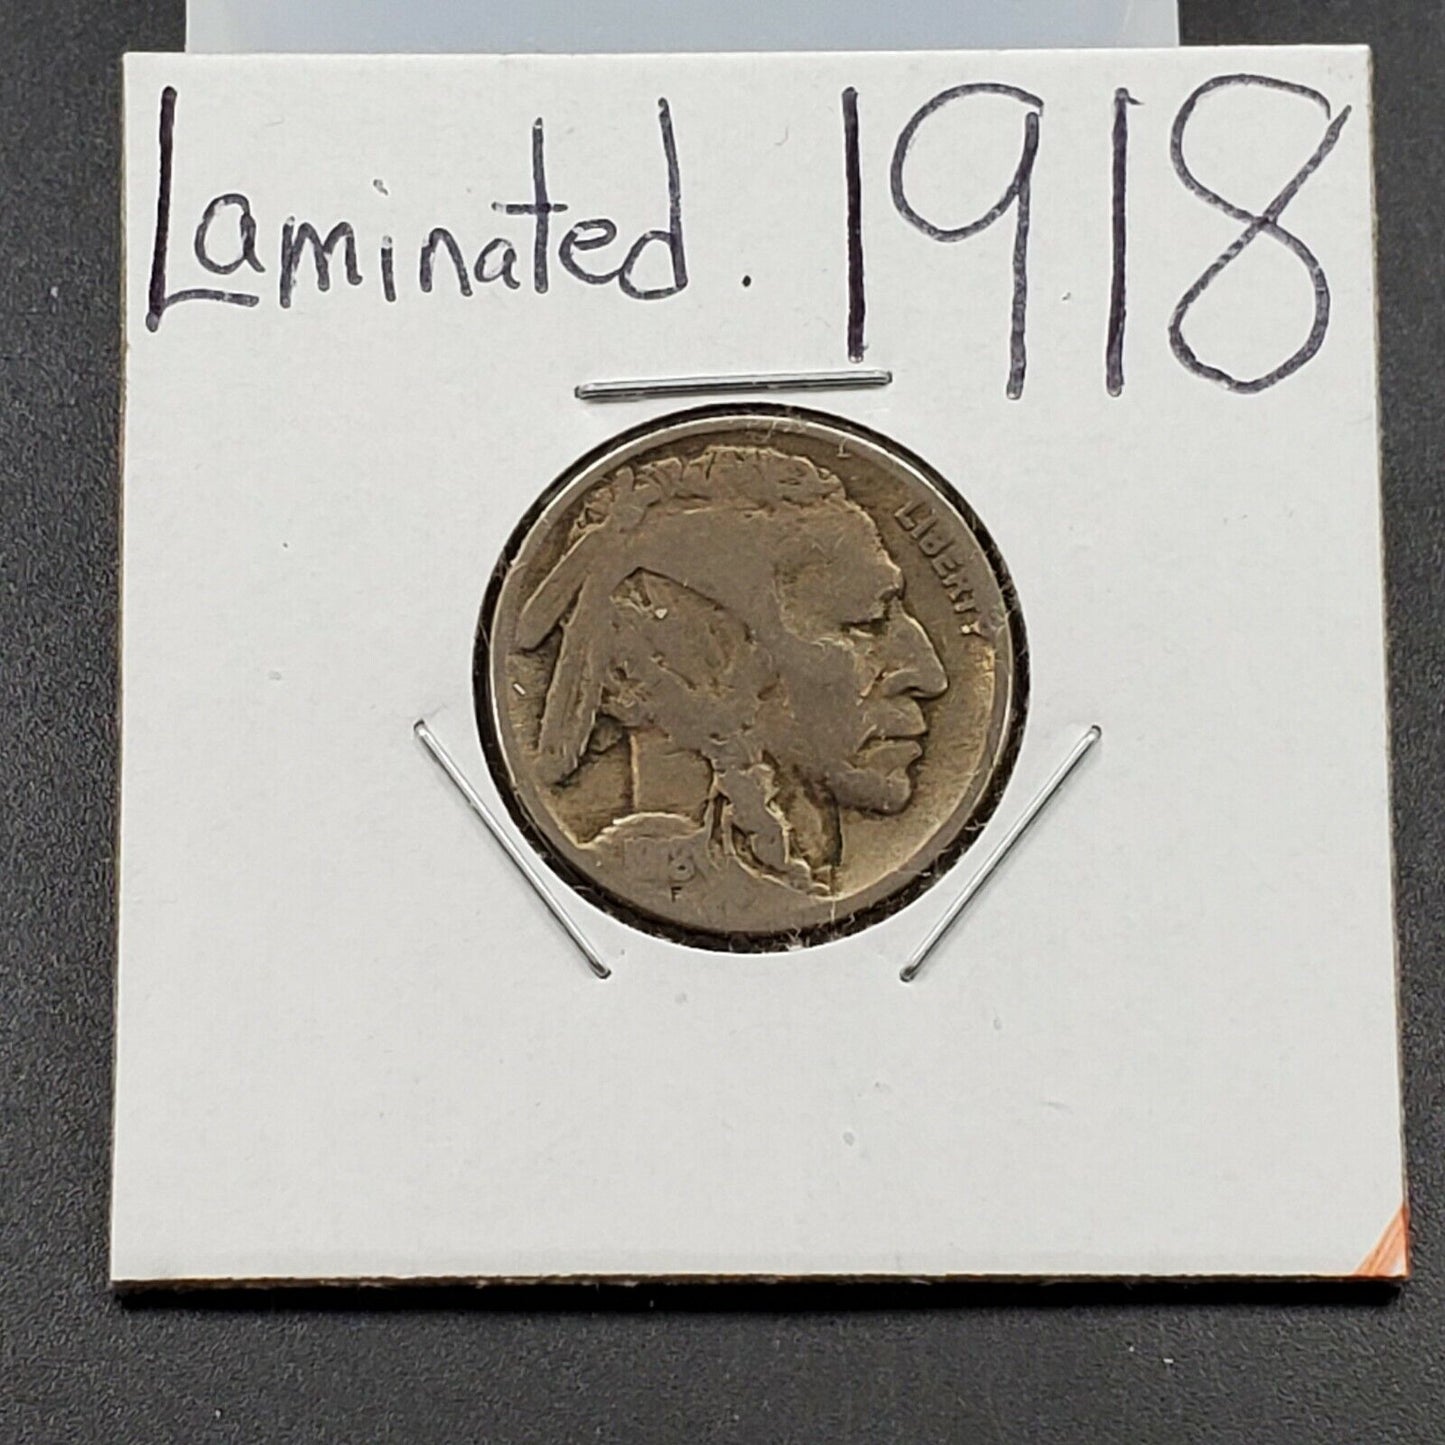 1918 5c Buffalo Indian Head Nickel Laminated Planchet Error Coin Variety